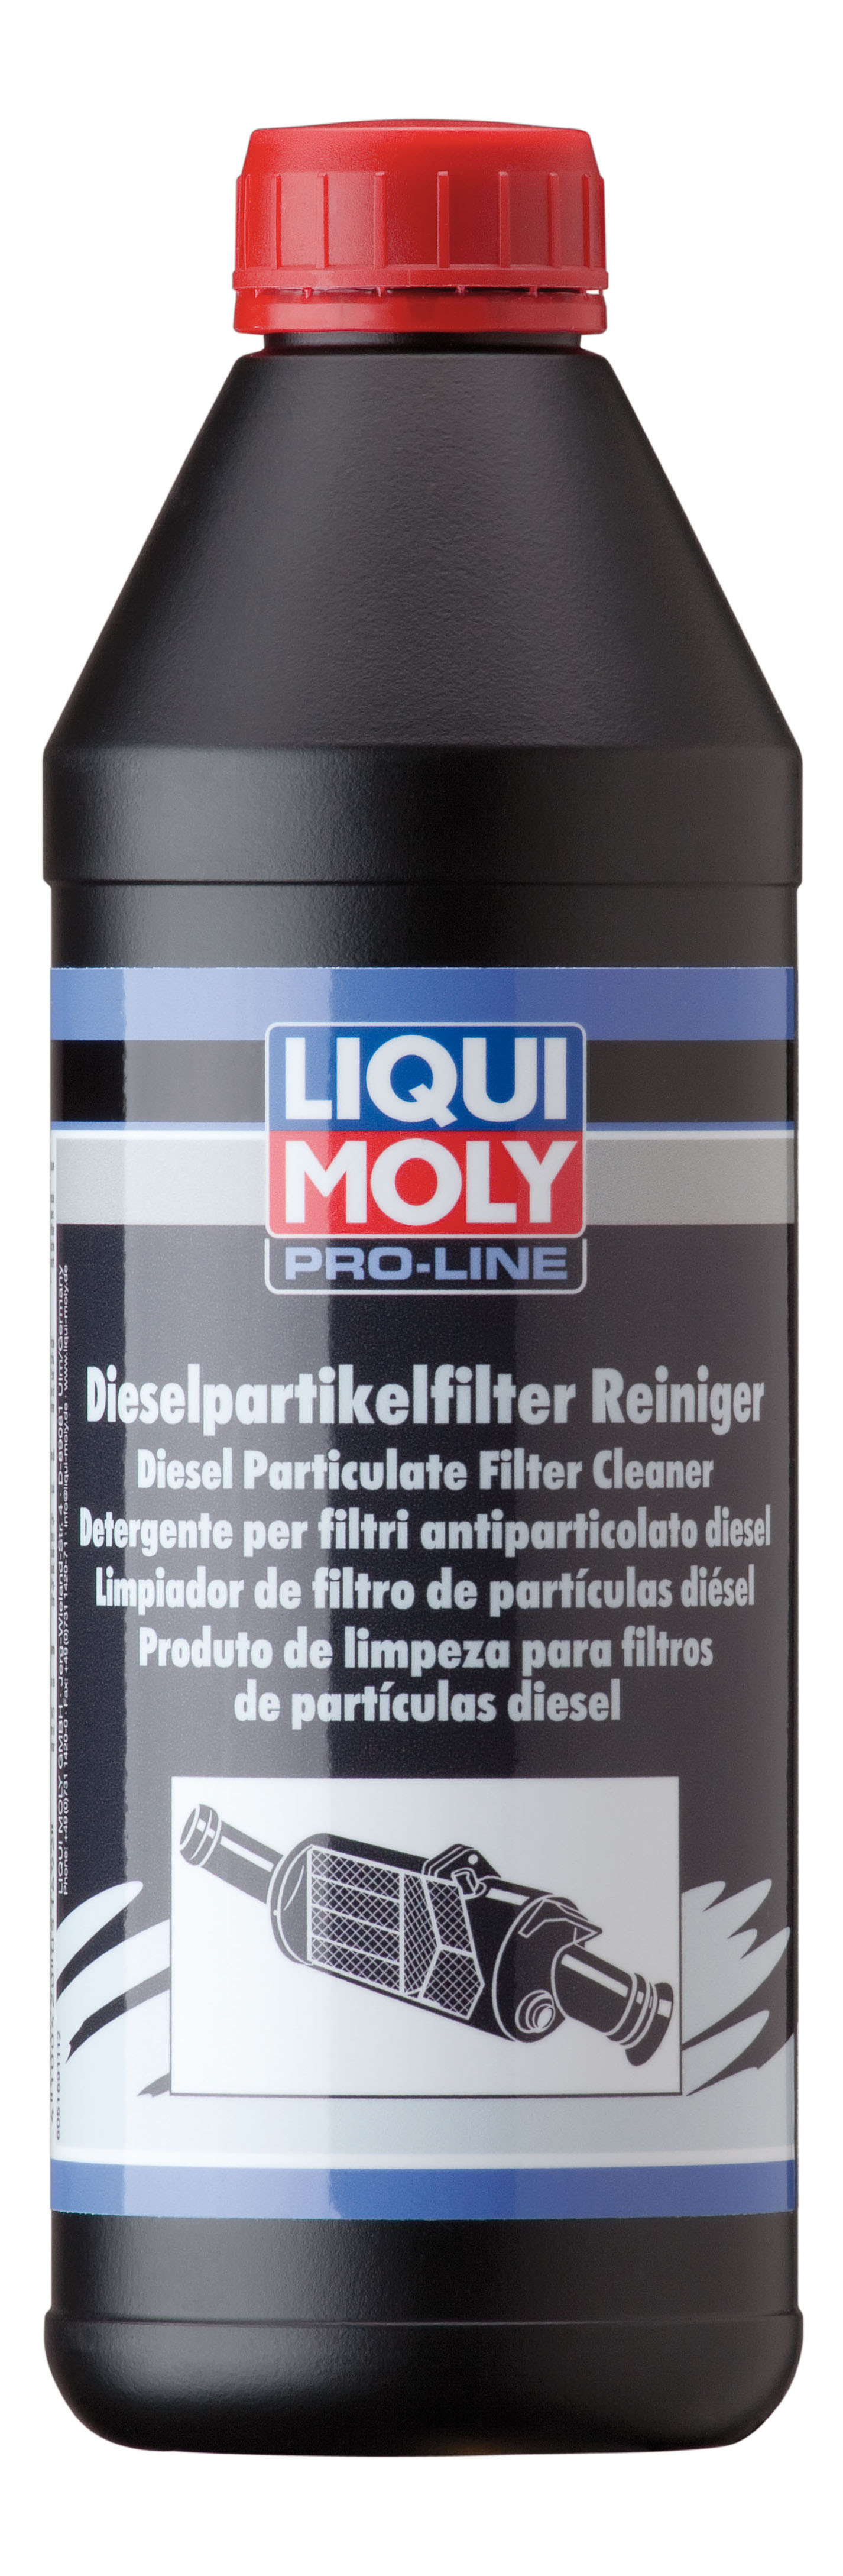 5169 Liqui Moly, Жидкость Для Очистки Фильтра Dpf Pro-Line Dieselpartikelfilter Reiniger 1